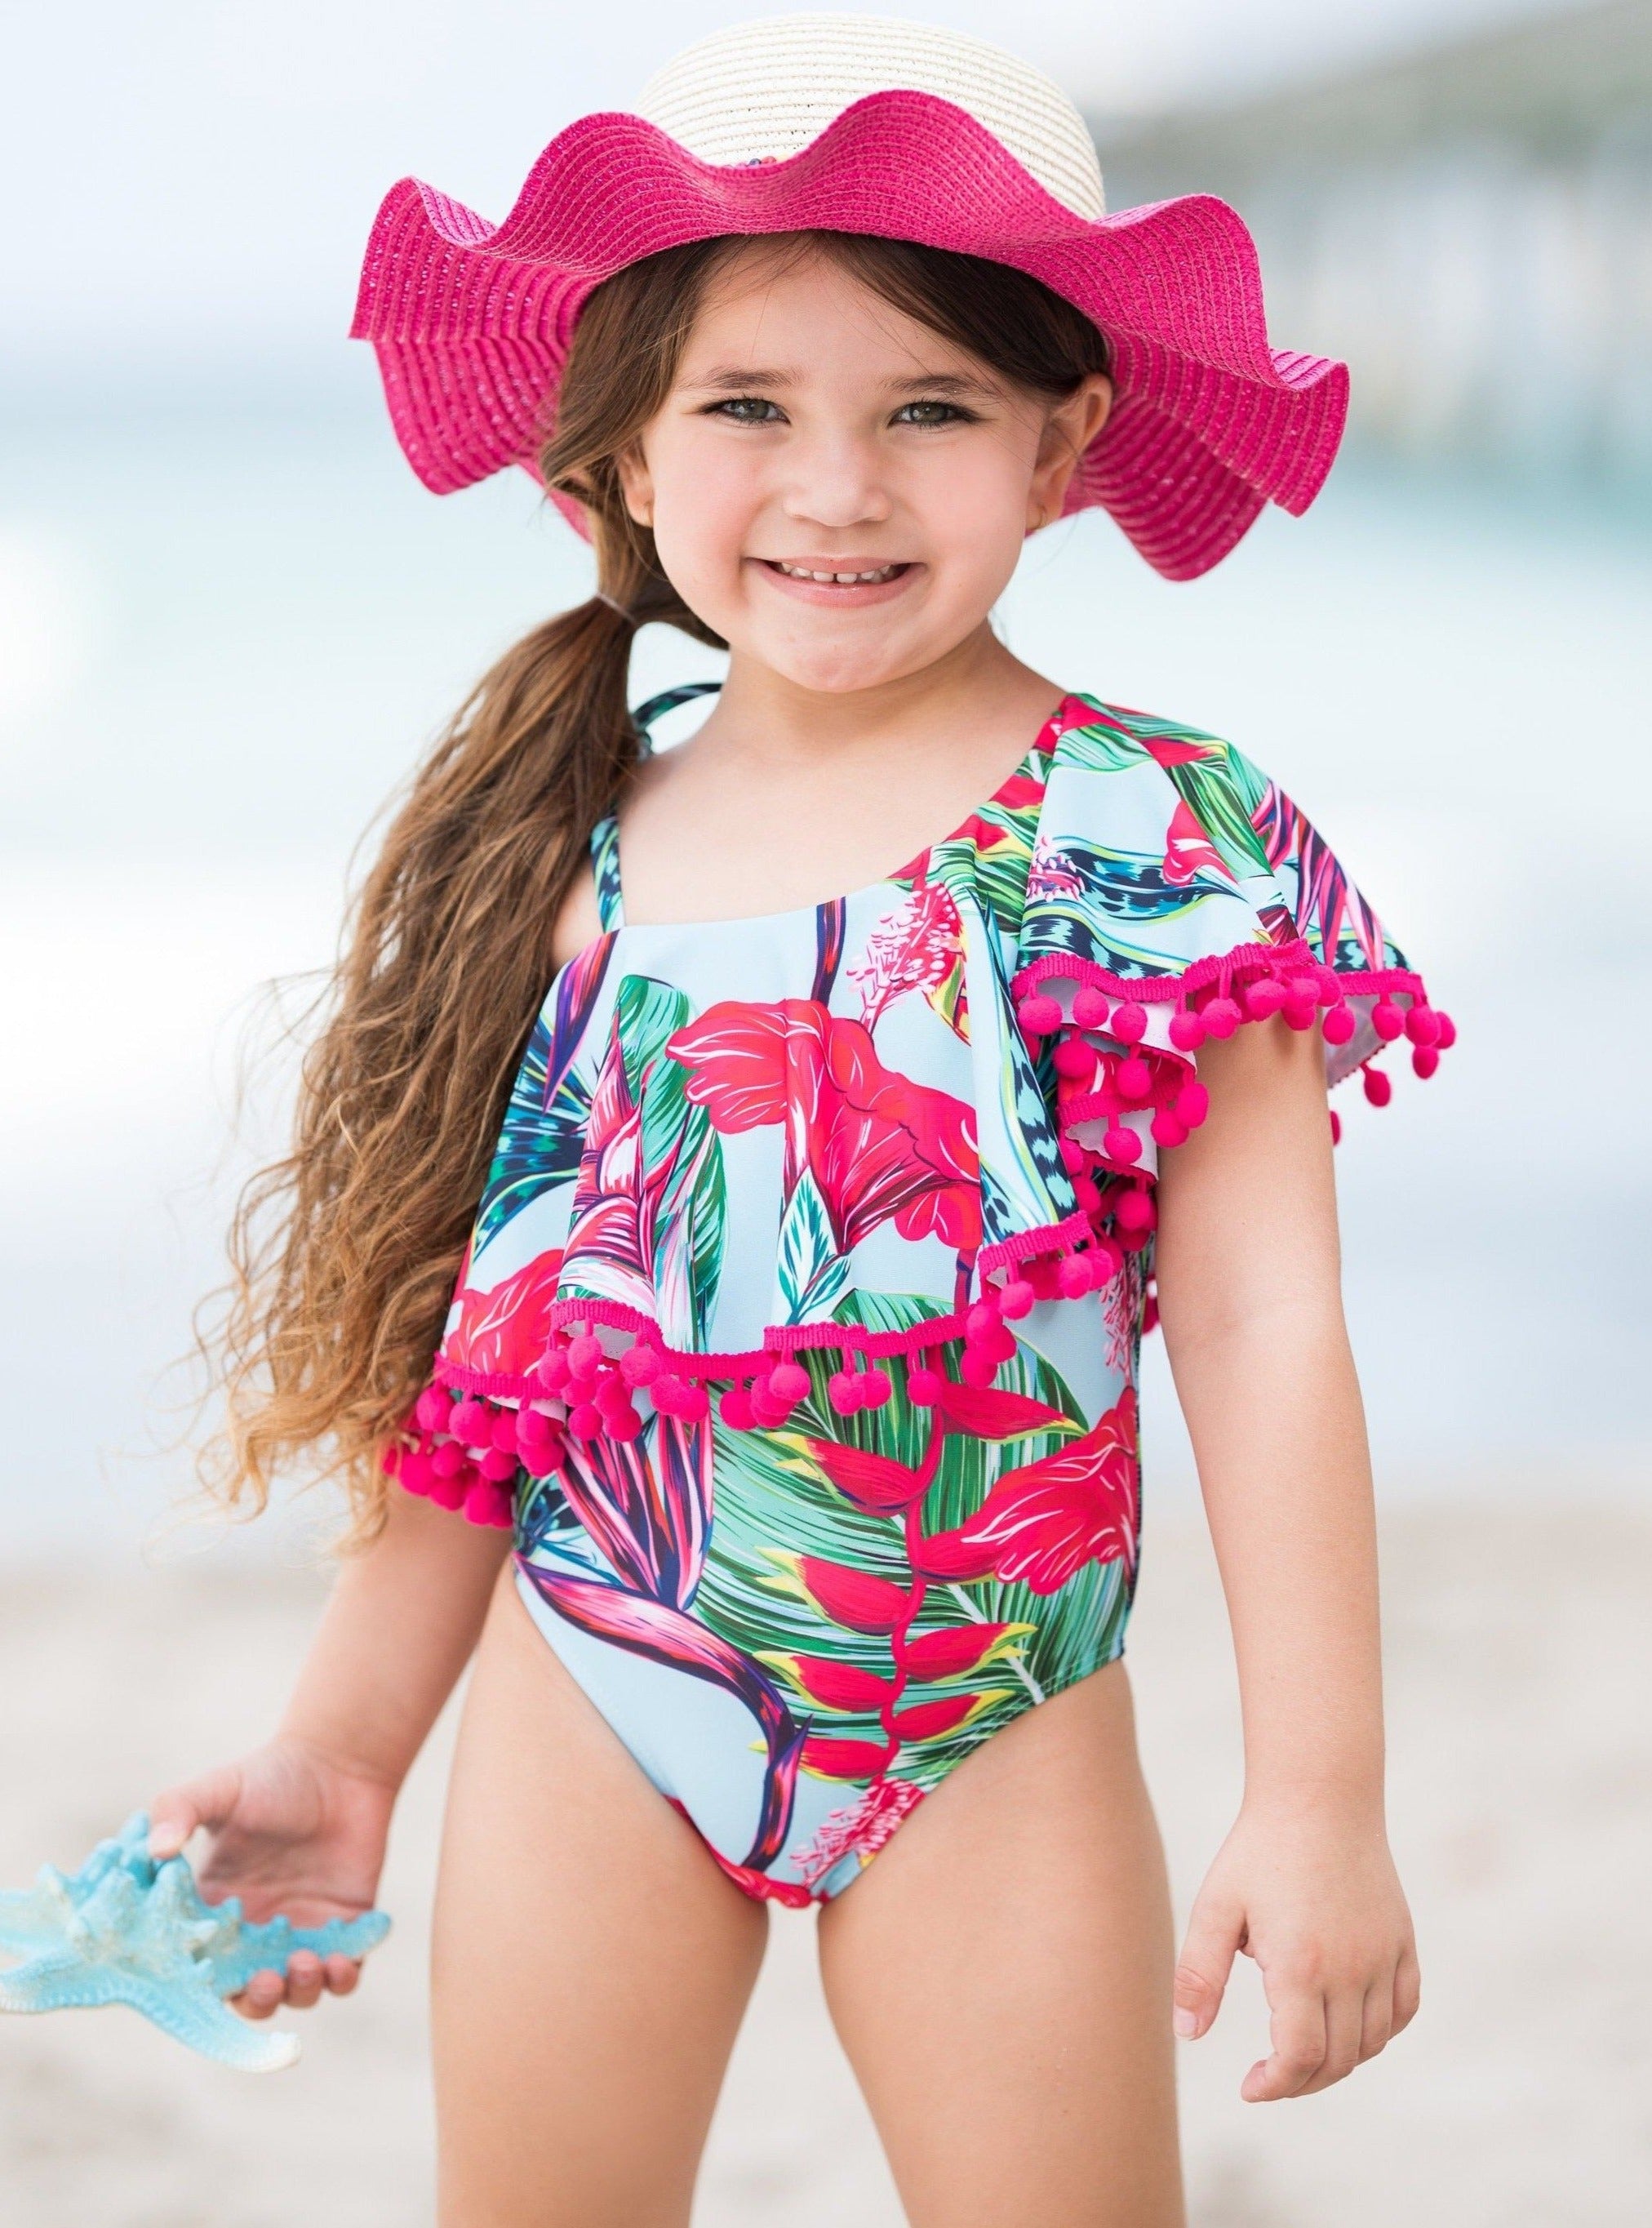 Splendid Swimwear Big Girls Youth Kids The Blues Too One Piece Striped –  Mall Closeouts